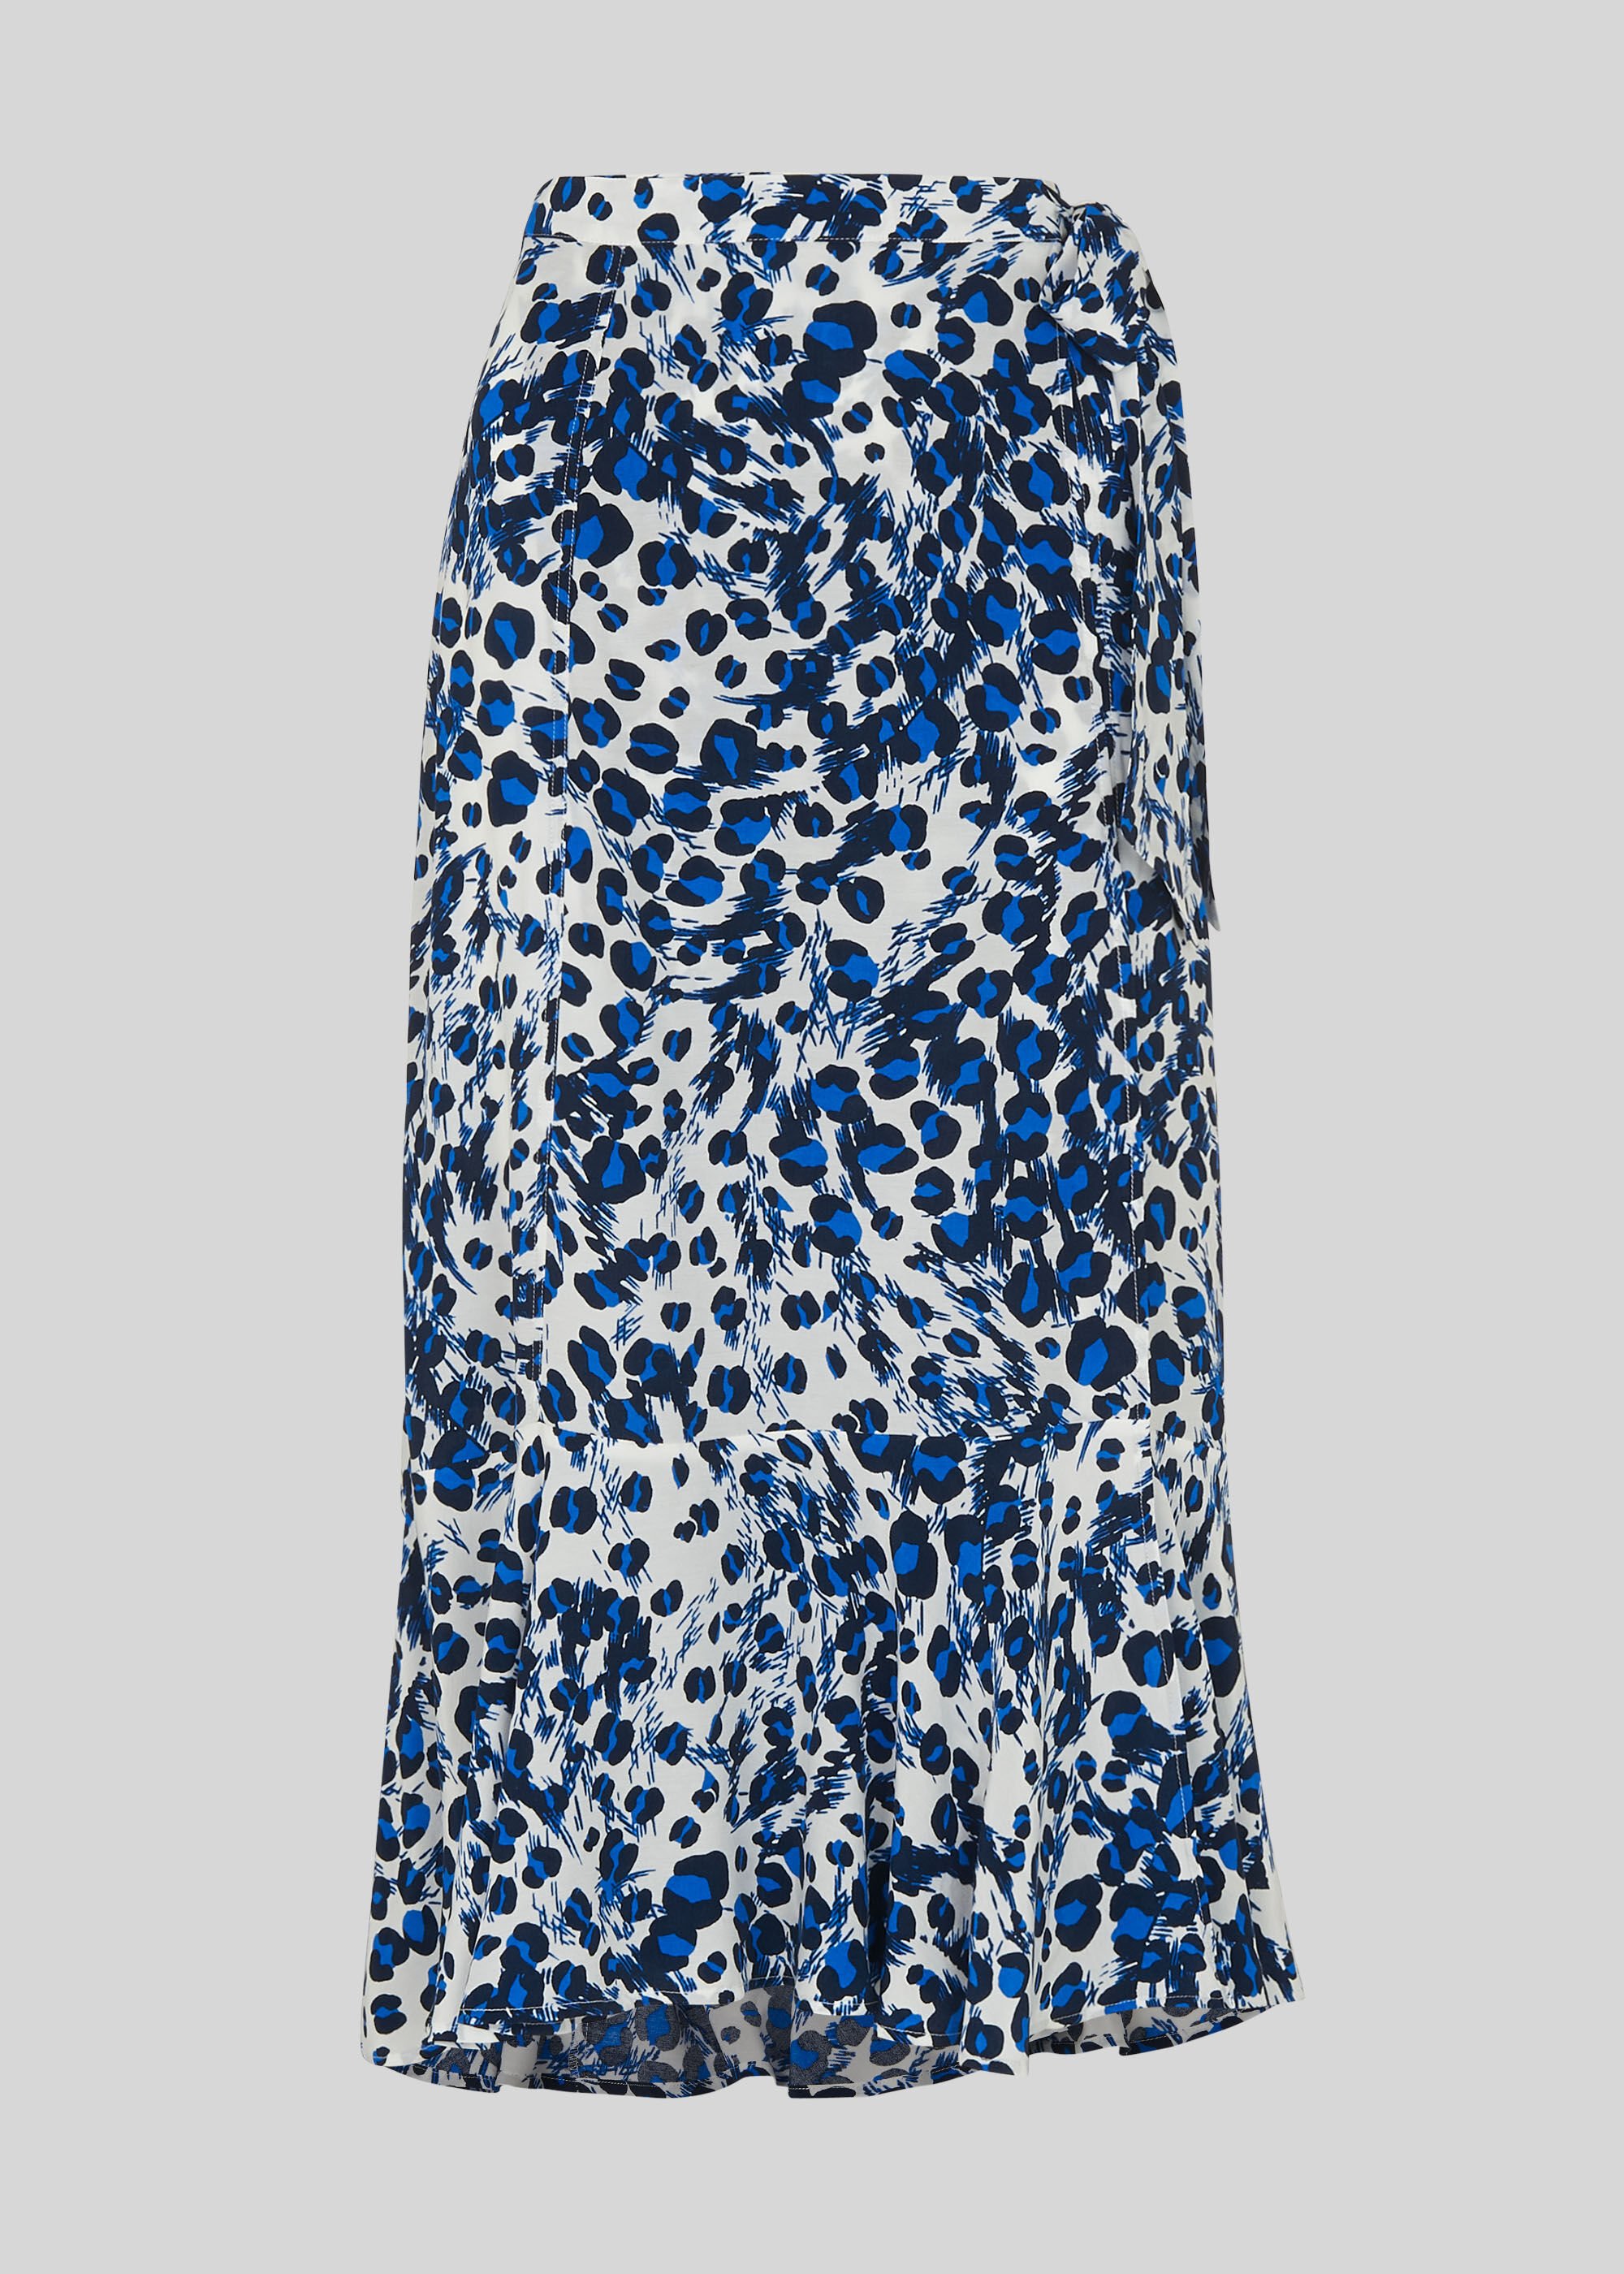 blue leopard wrap skirt